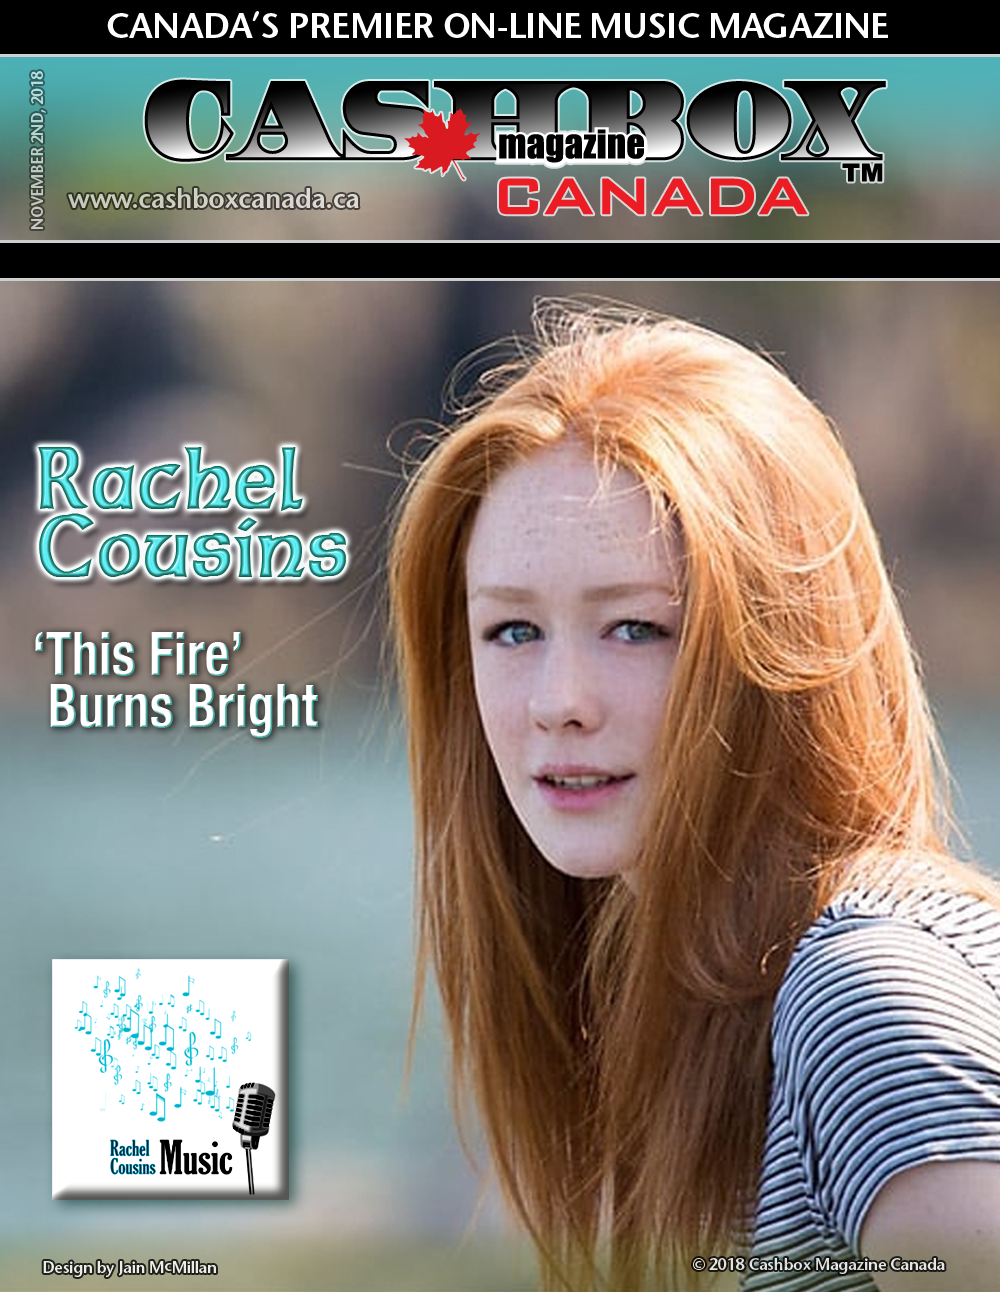 Rachel Cousins: “This Fire” Burns Bright